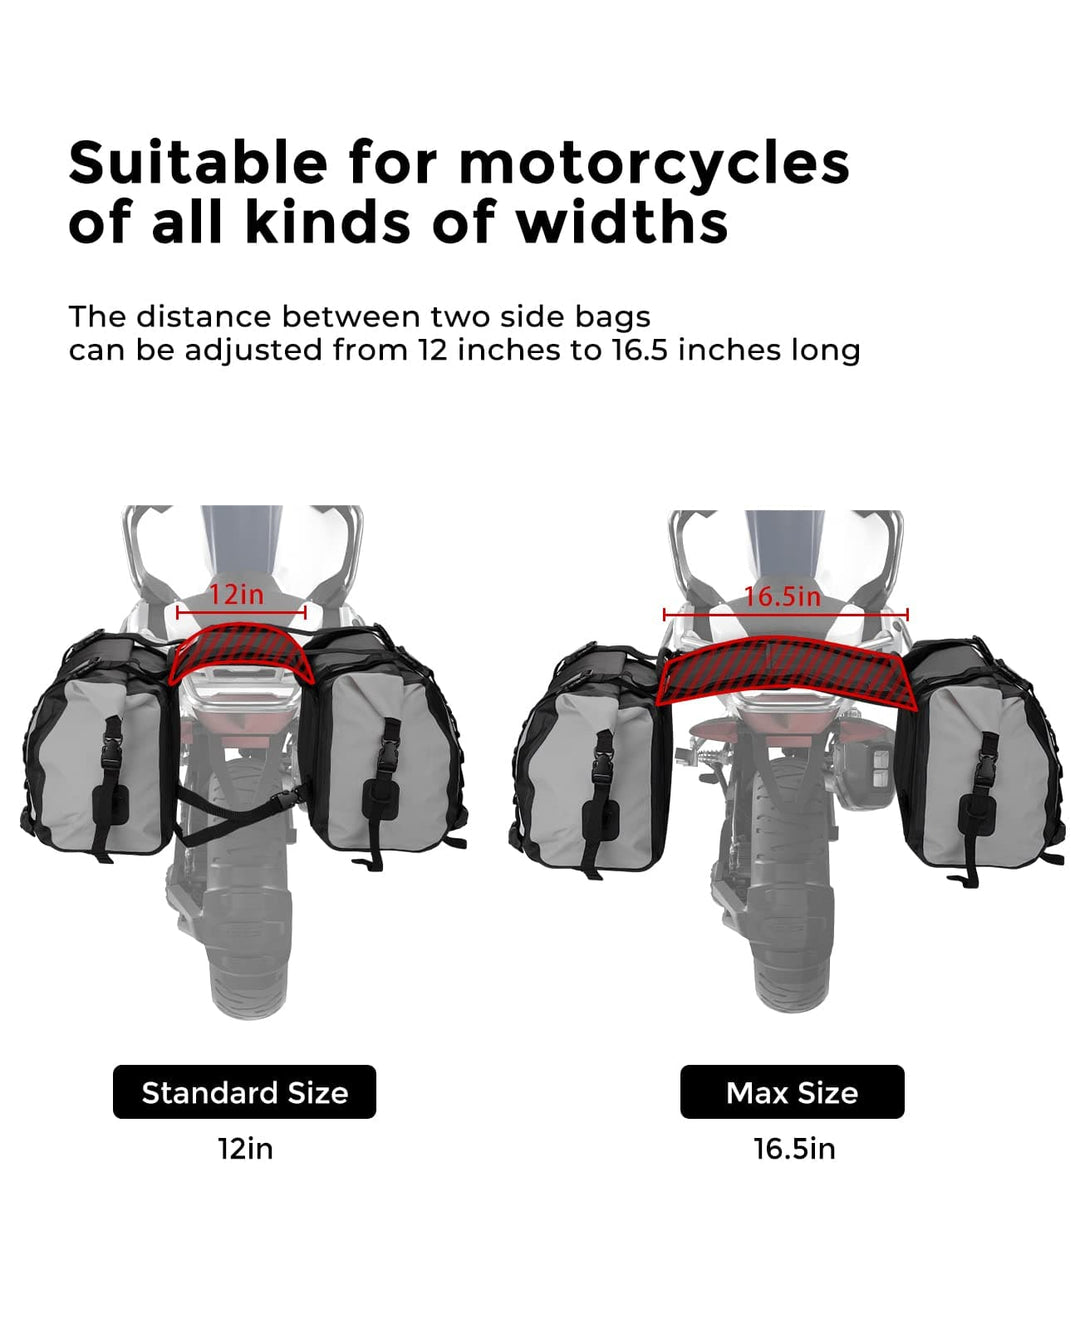 KEMIMOTO Motorcycle Saddlebags, Motorcycle Luggage Bag, Waterproof